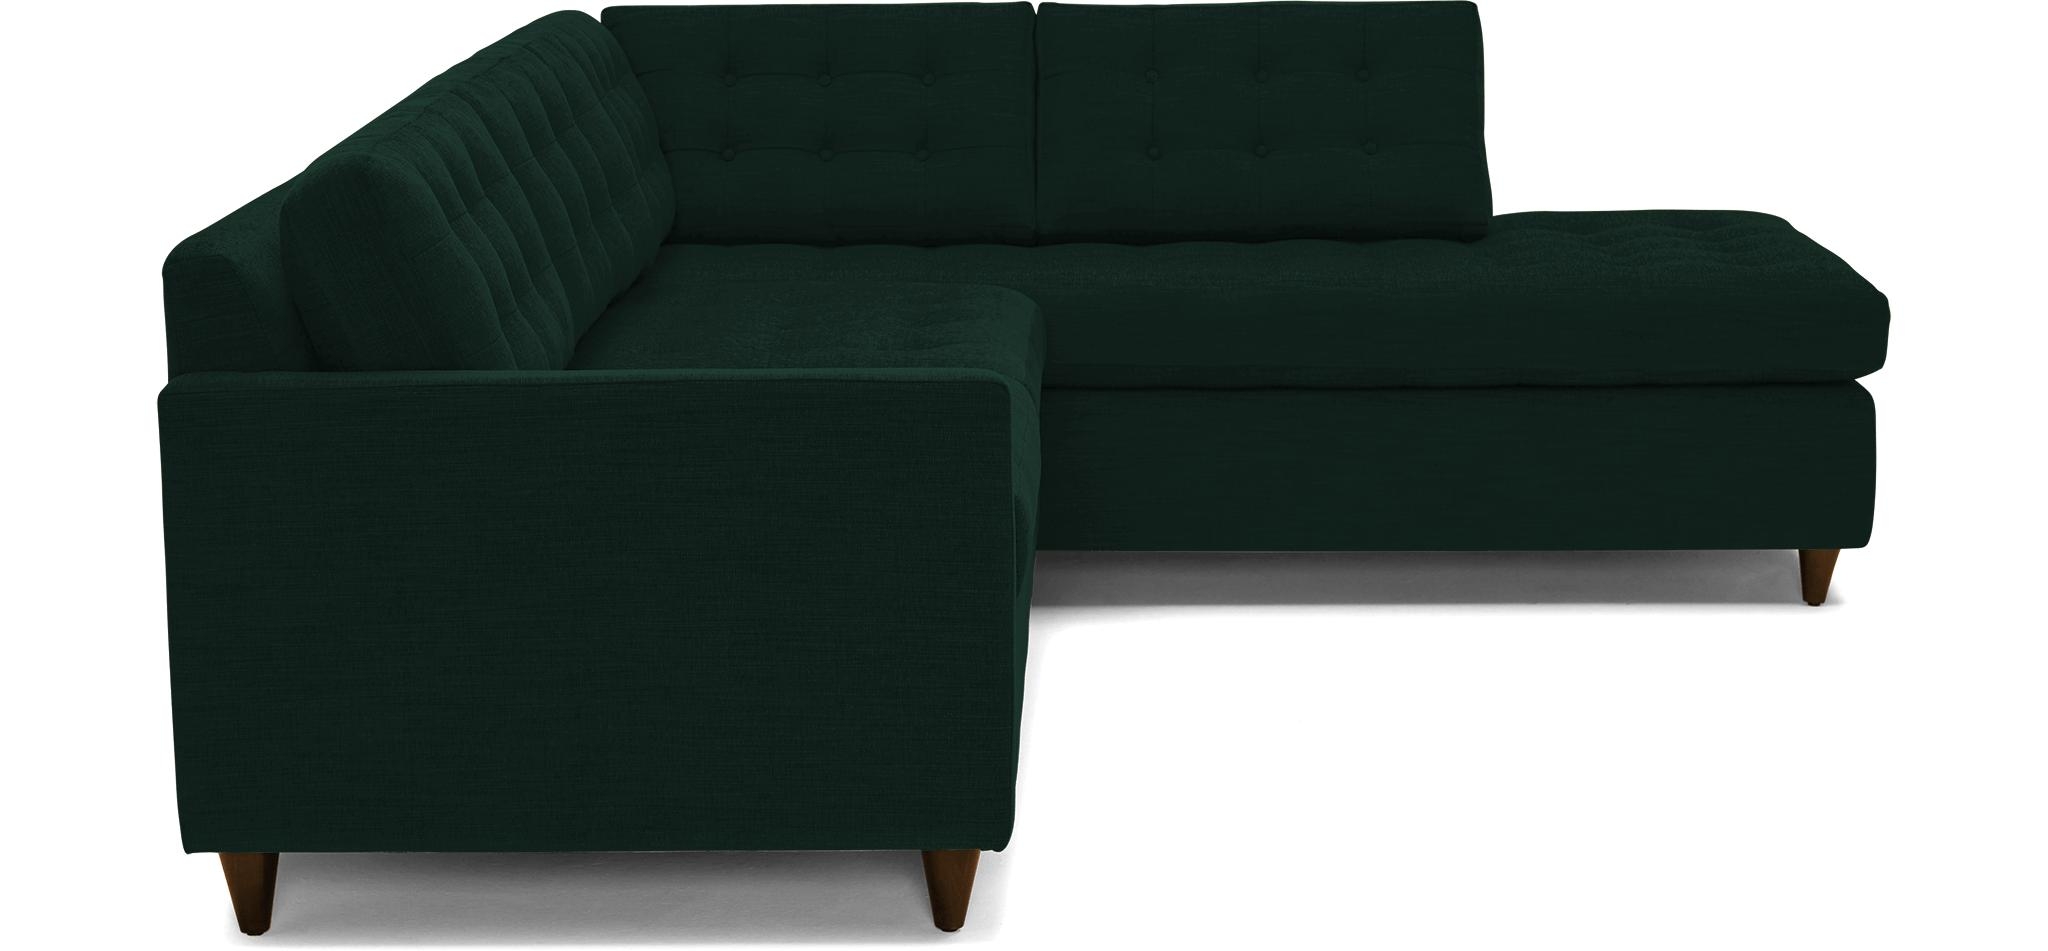 Green Eliot Mid Century Modern Bumper Sleeper Sectional - Royale Evergreen - Mocha - Left - Image 2